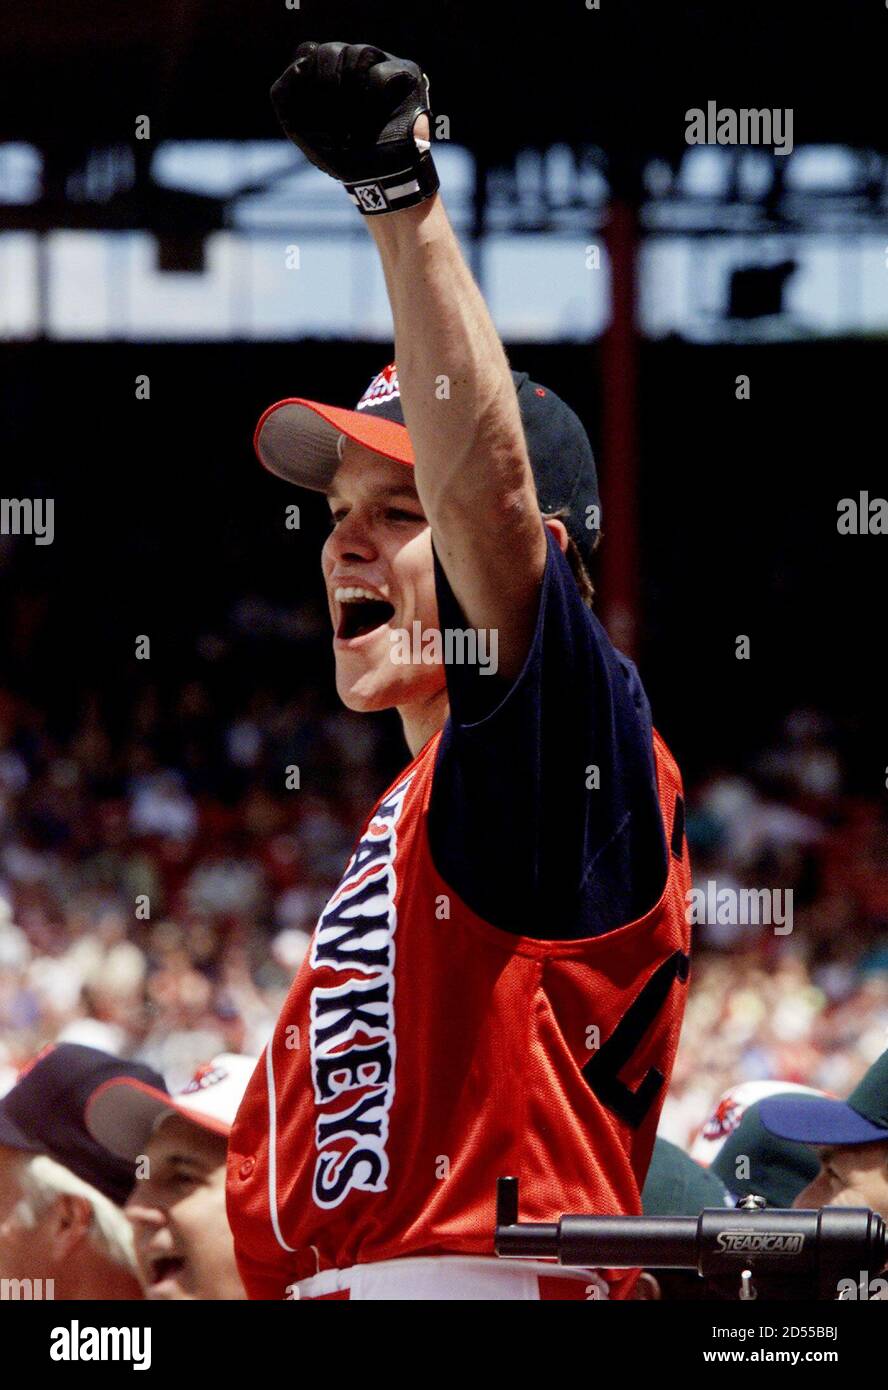 Actor Matt Damon, star of the movie "Good Will Hunting," celebrates as  former Boston Red Sox slugger Jim Rice hits a home run, helping Damon's  team, the Yawkeys, win the Major League